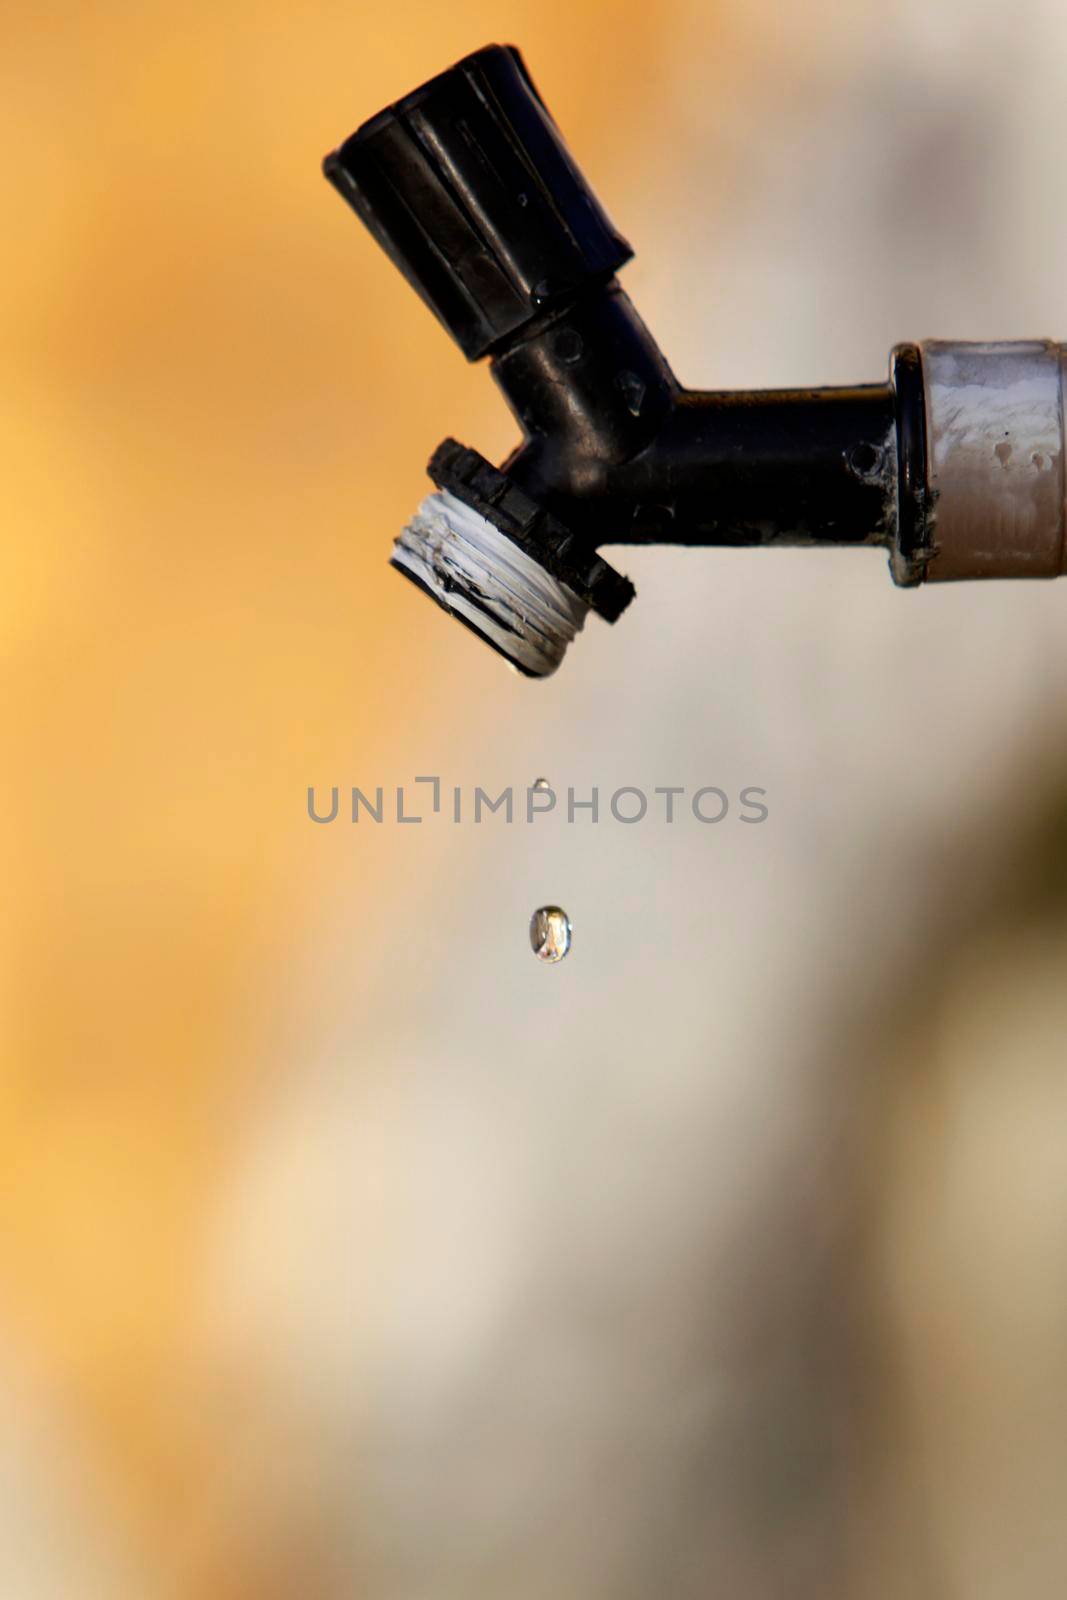 itajuipe, bahia, brazil - june 1, 2022: dripping garden faucet symbolizing lack of water.